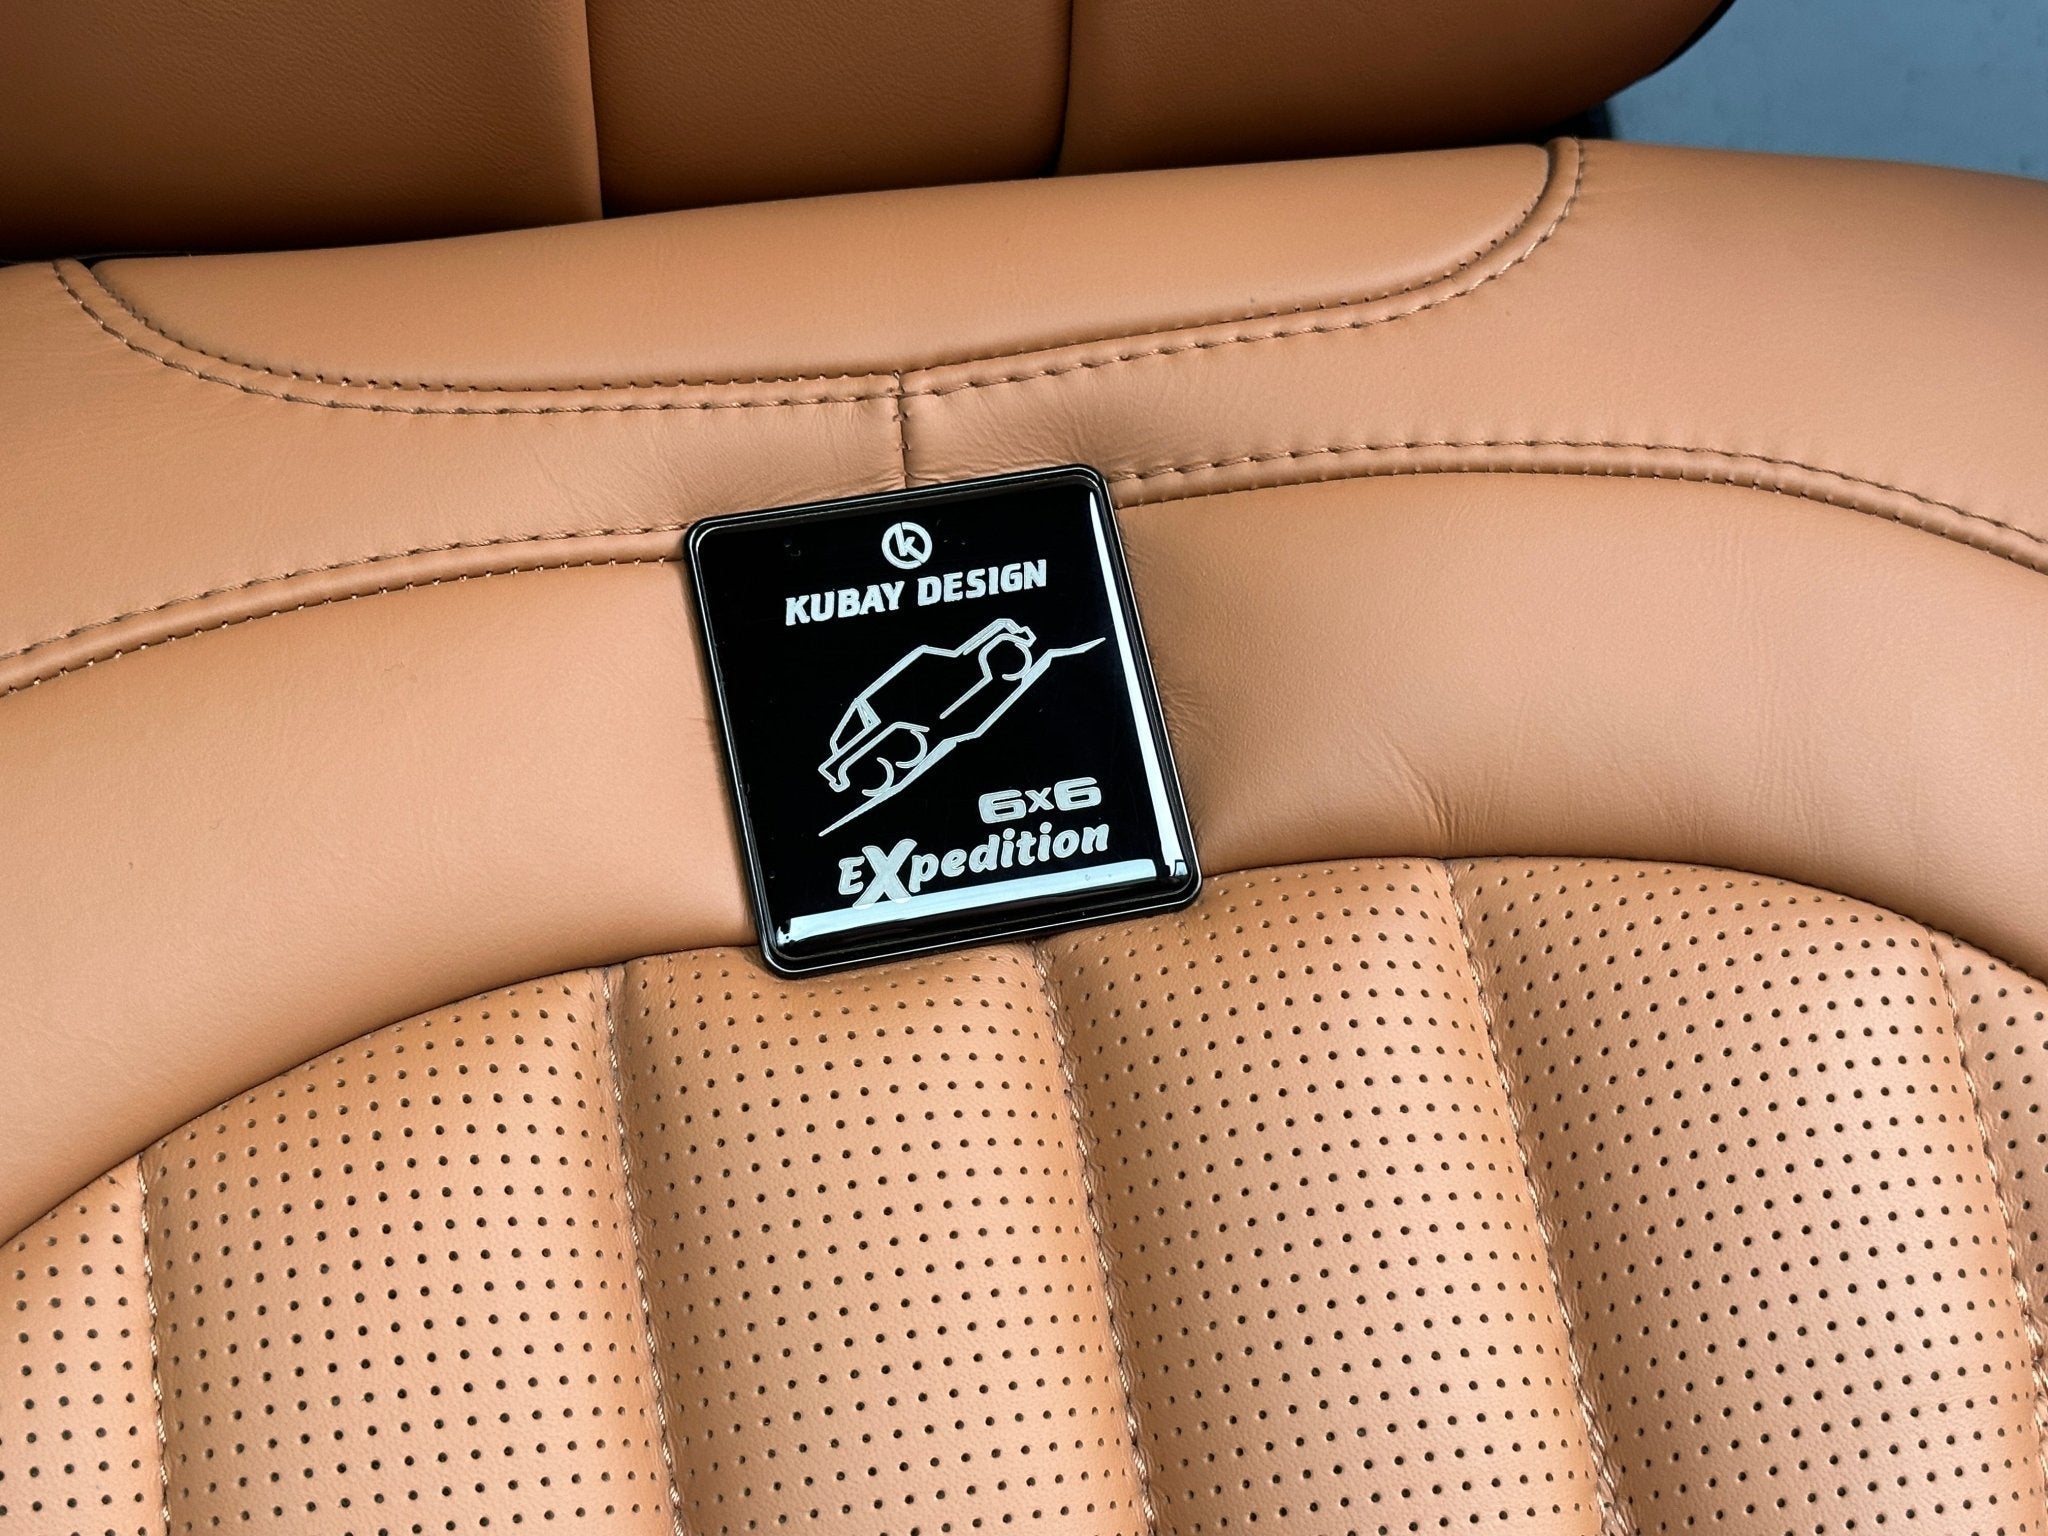 Superblack Kubay Design Expedition 6x6 Metal Seats Emblem Badge Logo 4 pcs set for Mercedes W463 6x6